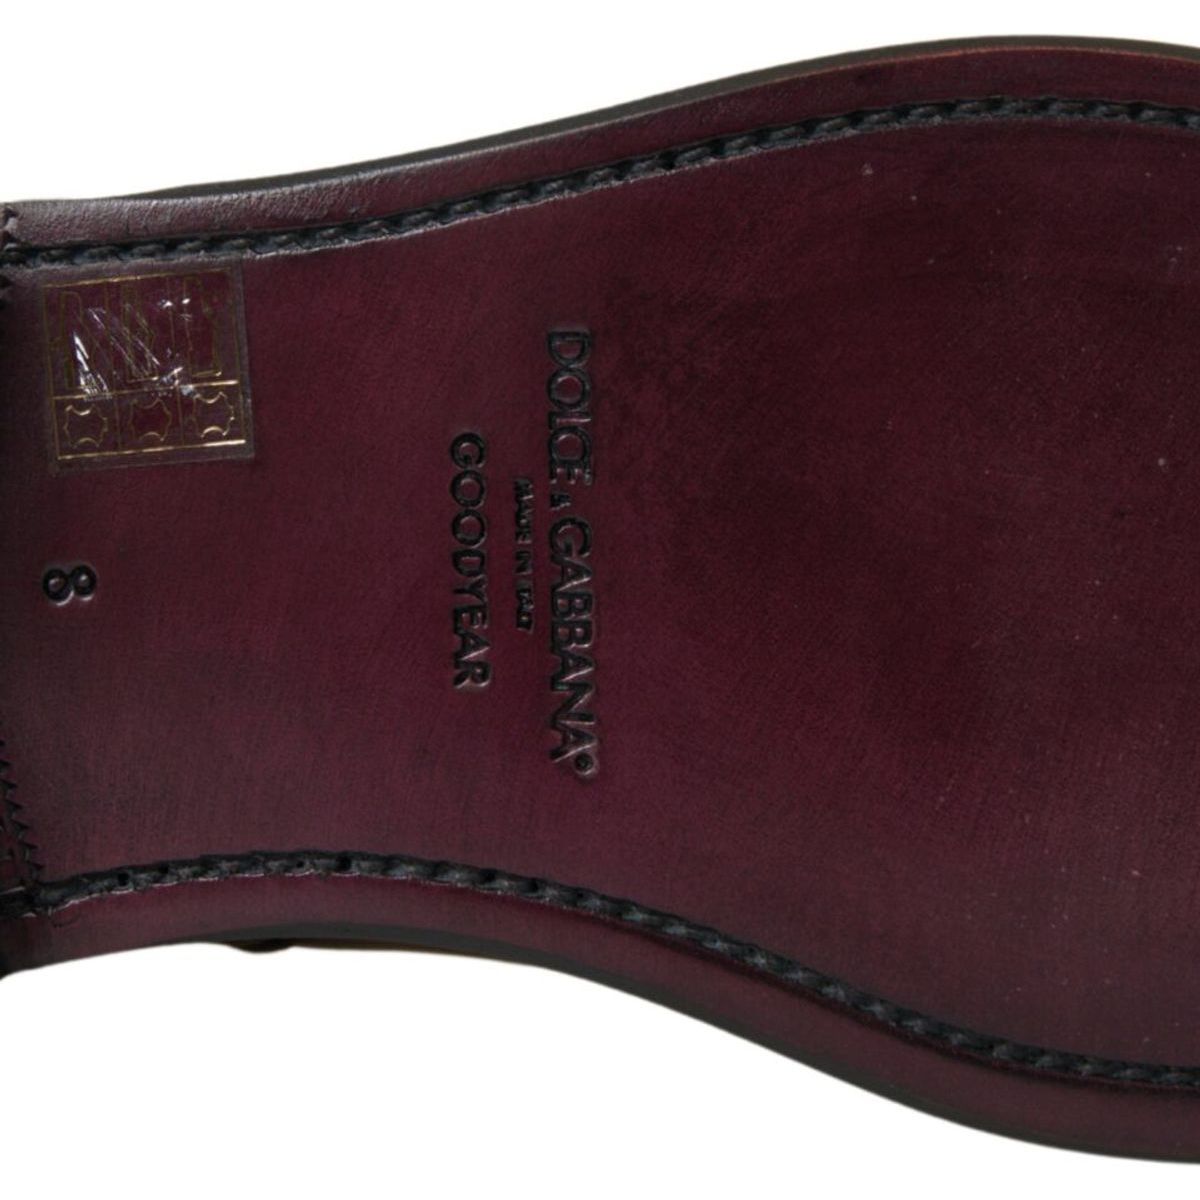 Dolce & Gabbana Elegant Leather Chelsea Boots brown-leather-chelsea-mens-boots-shoes 465A8391-scaled-e72dda54-2d1_177e5691-edb0-4f48-867a-a3e9e5162818.jpg